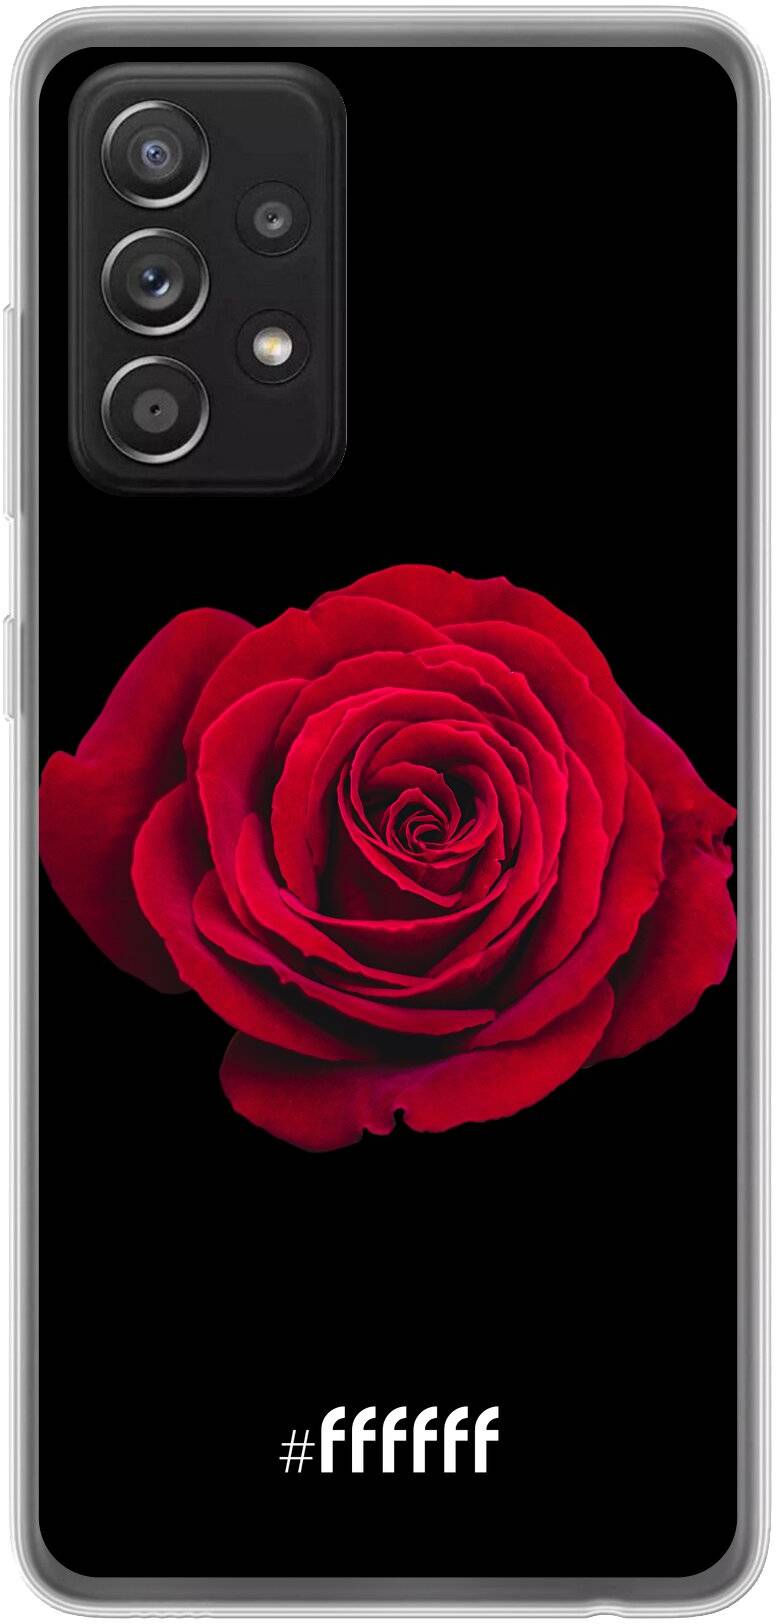 Radiant Rose Galaxy A52